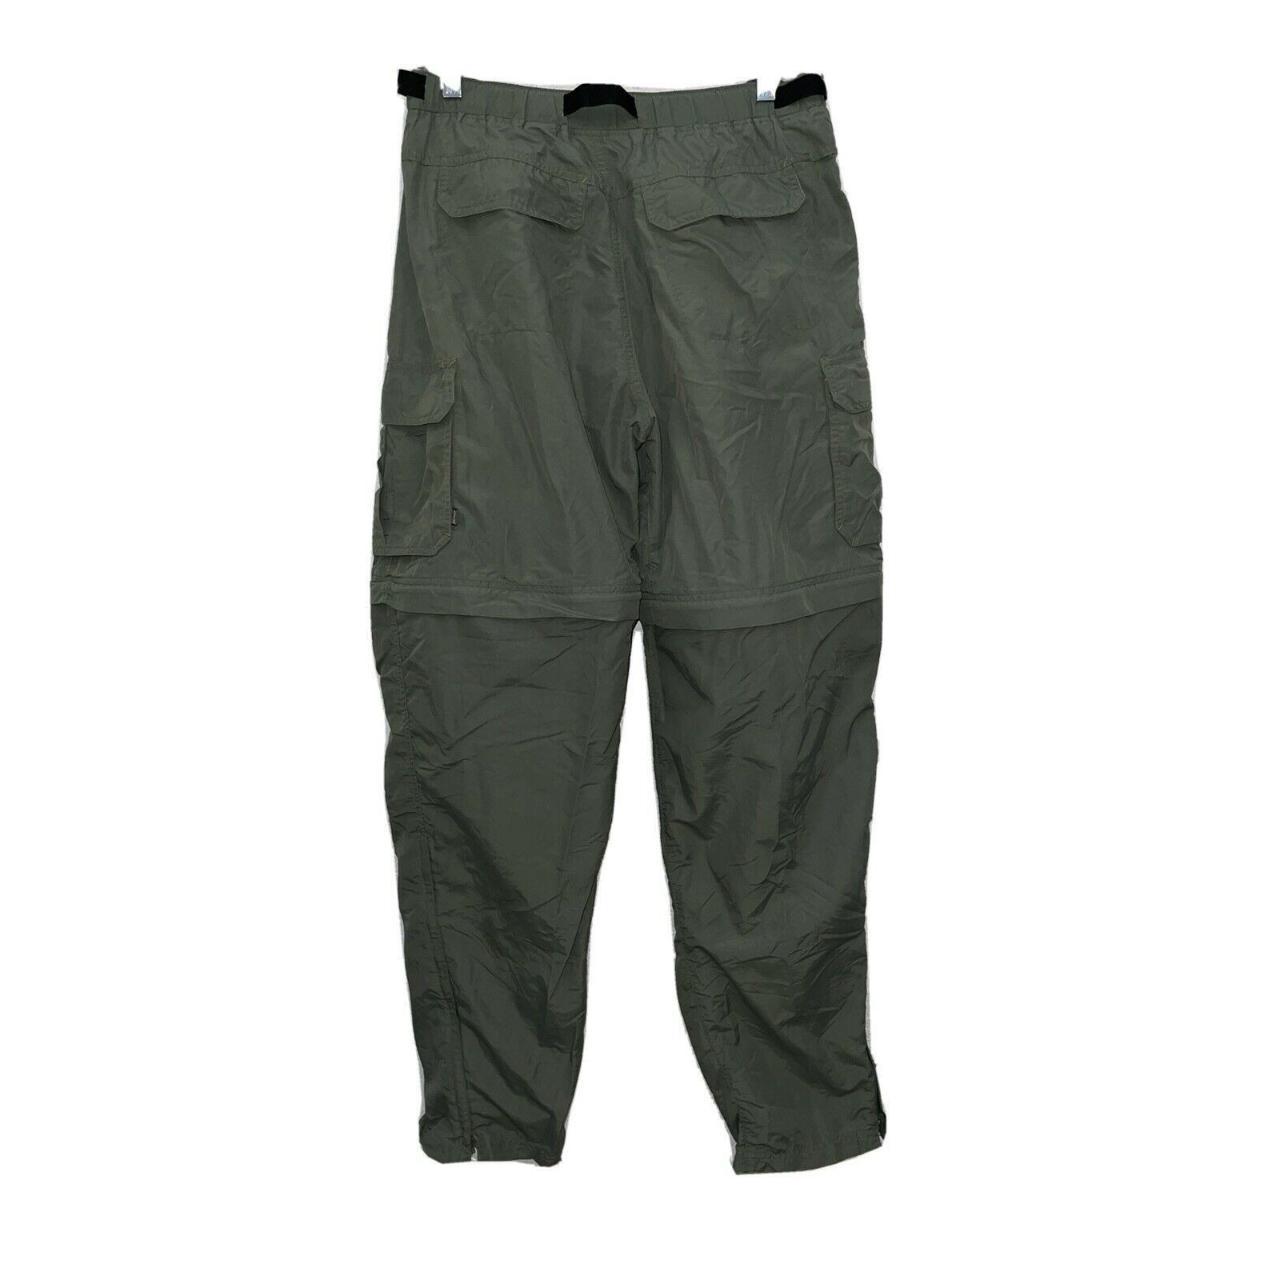 REI Men's Pants UPF 50+ Nylon Hiking Fishing Camp... - Depop